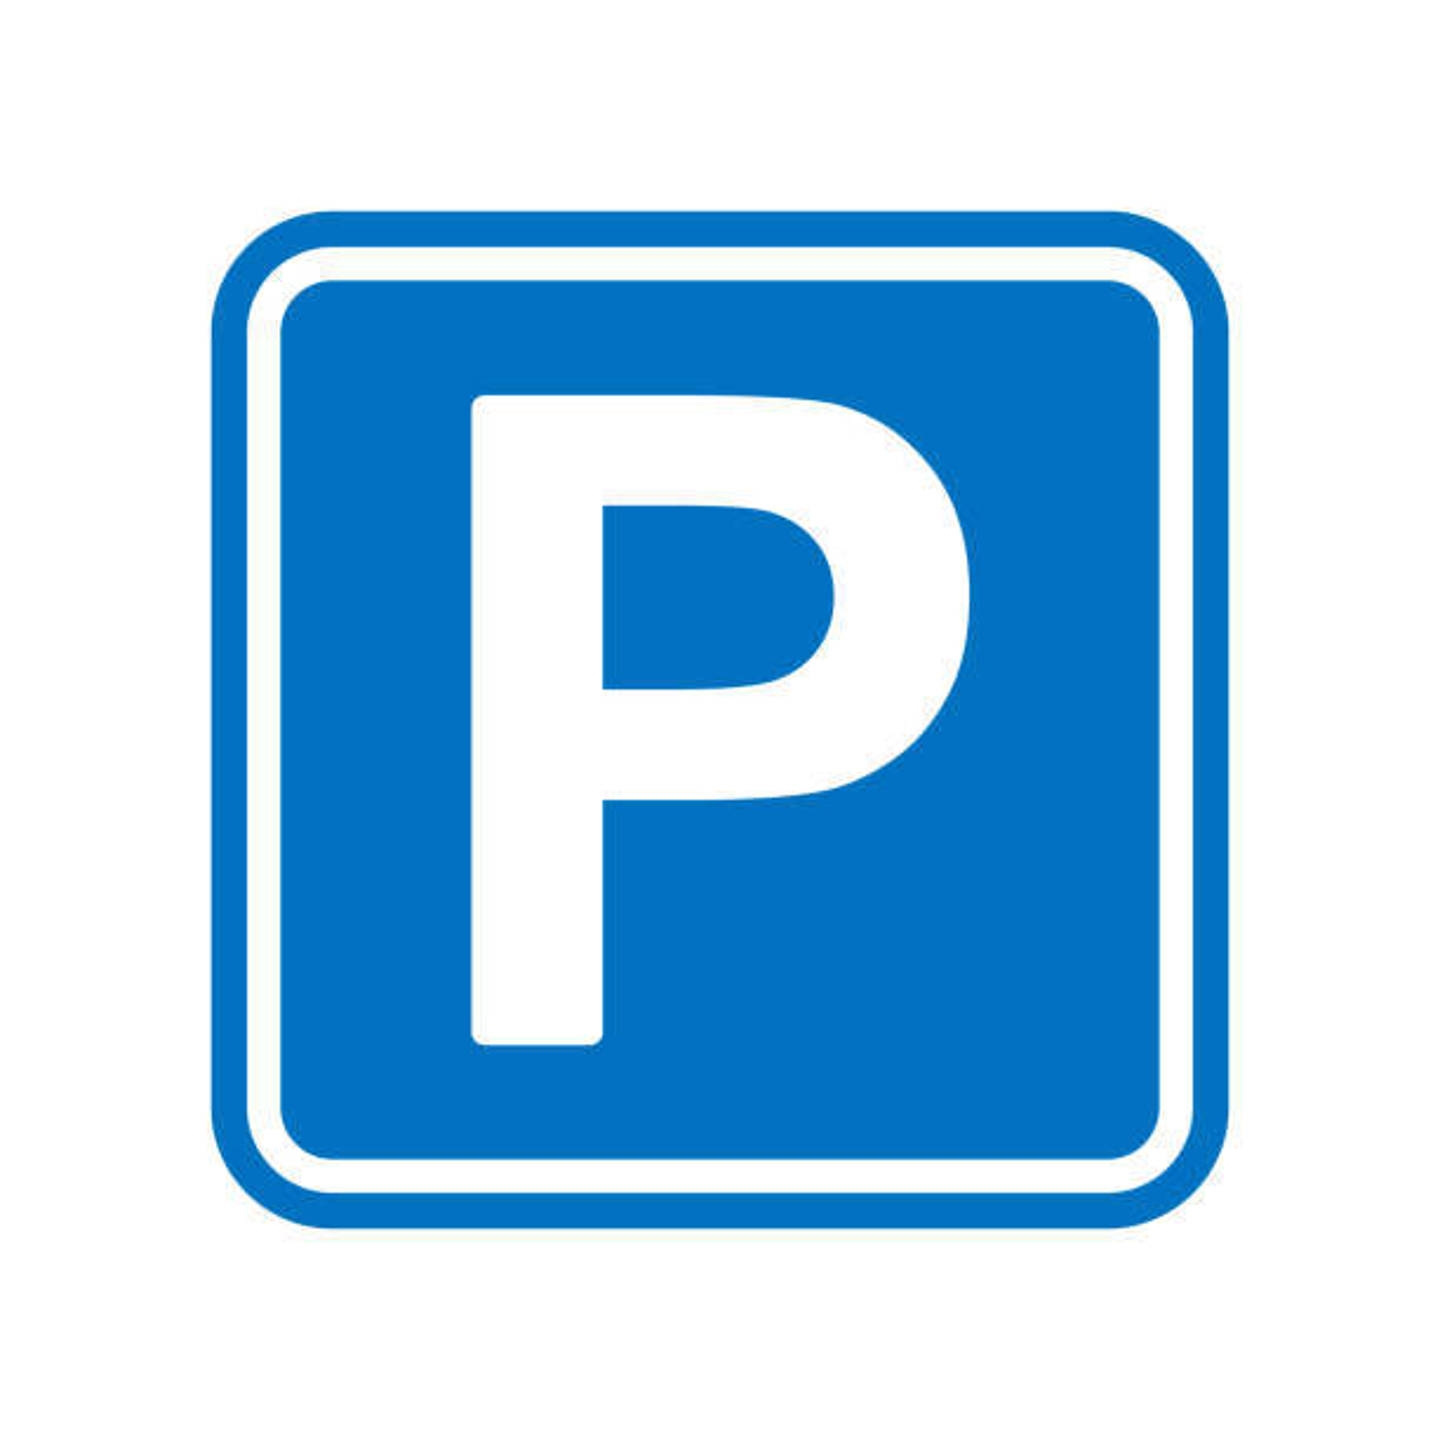 Parking te  koop in Sint-Jans-Molenbeek 1080 15450.00€  slaapkamers 12.50m² - Zoekertje 41288